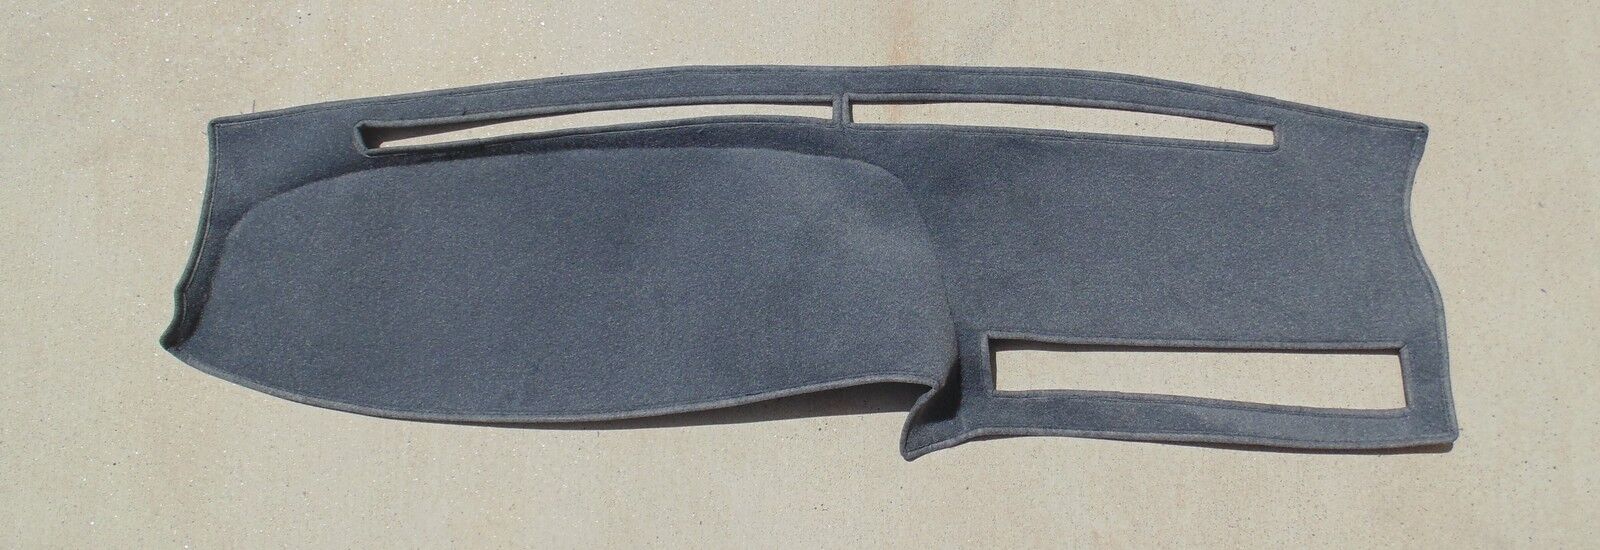 1986-1991 TOYOTA SUPRA  DASH COVER MAT dashboard cover  charcoal gray